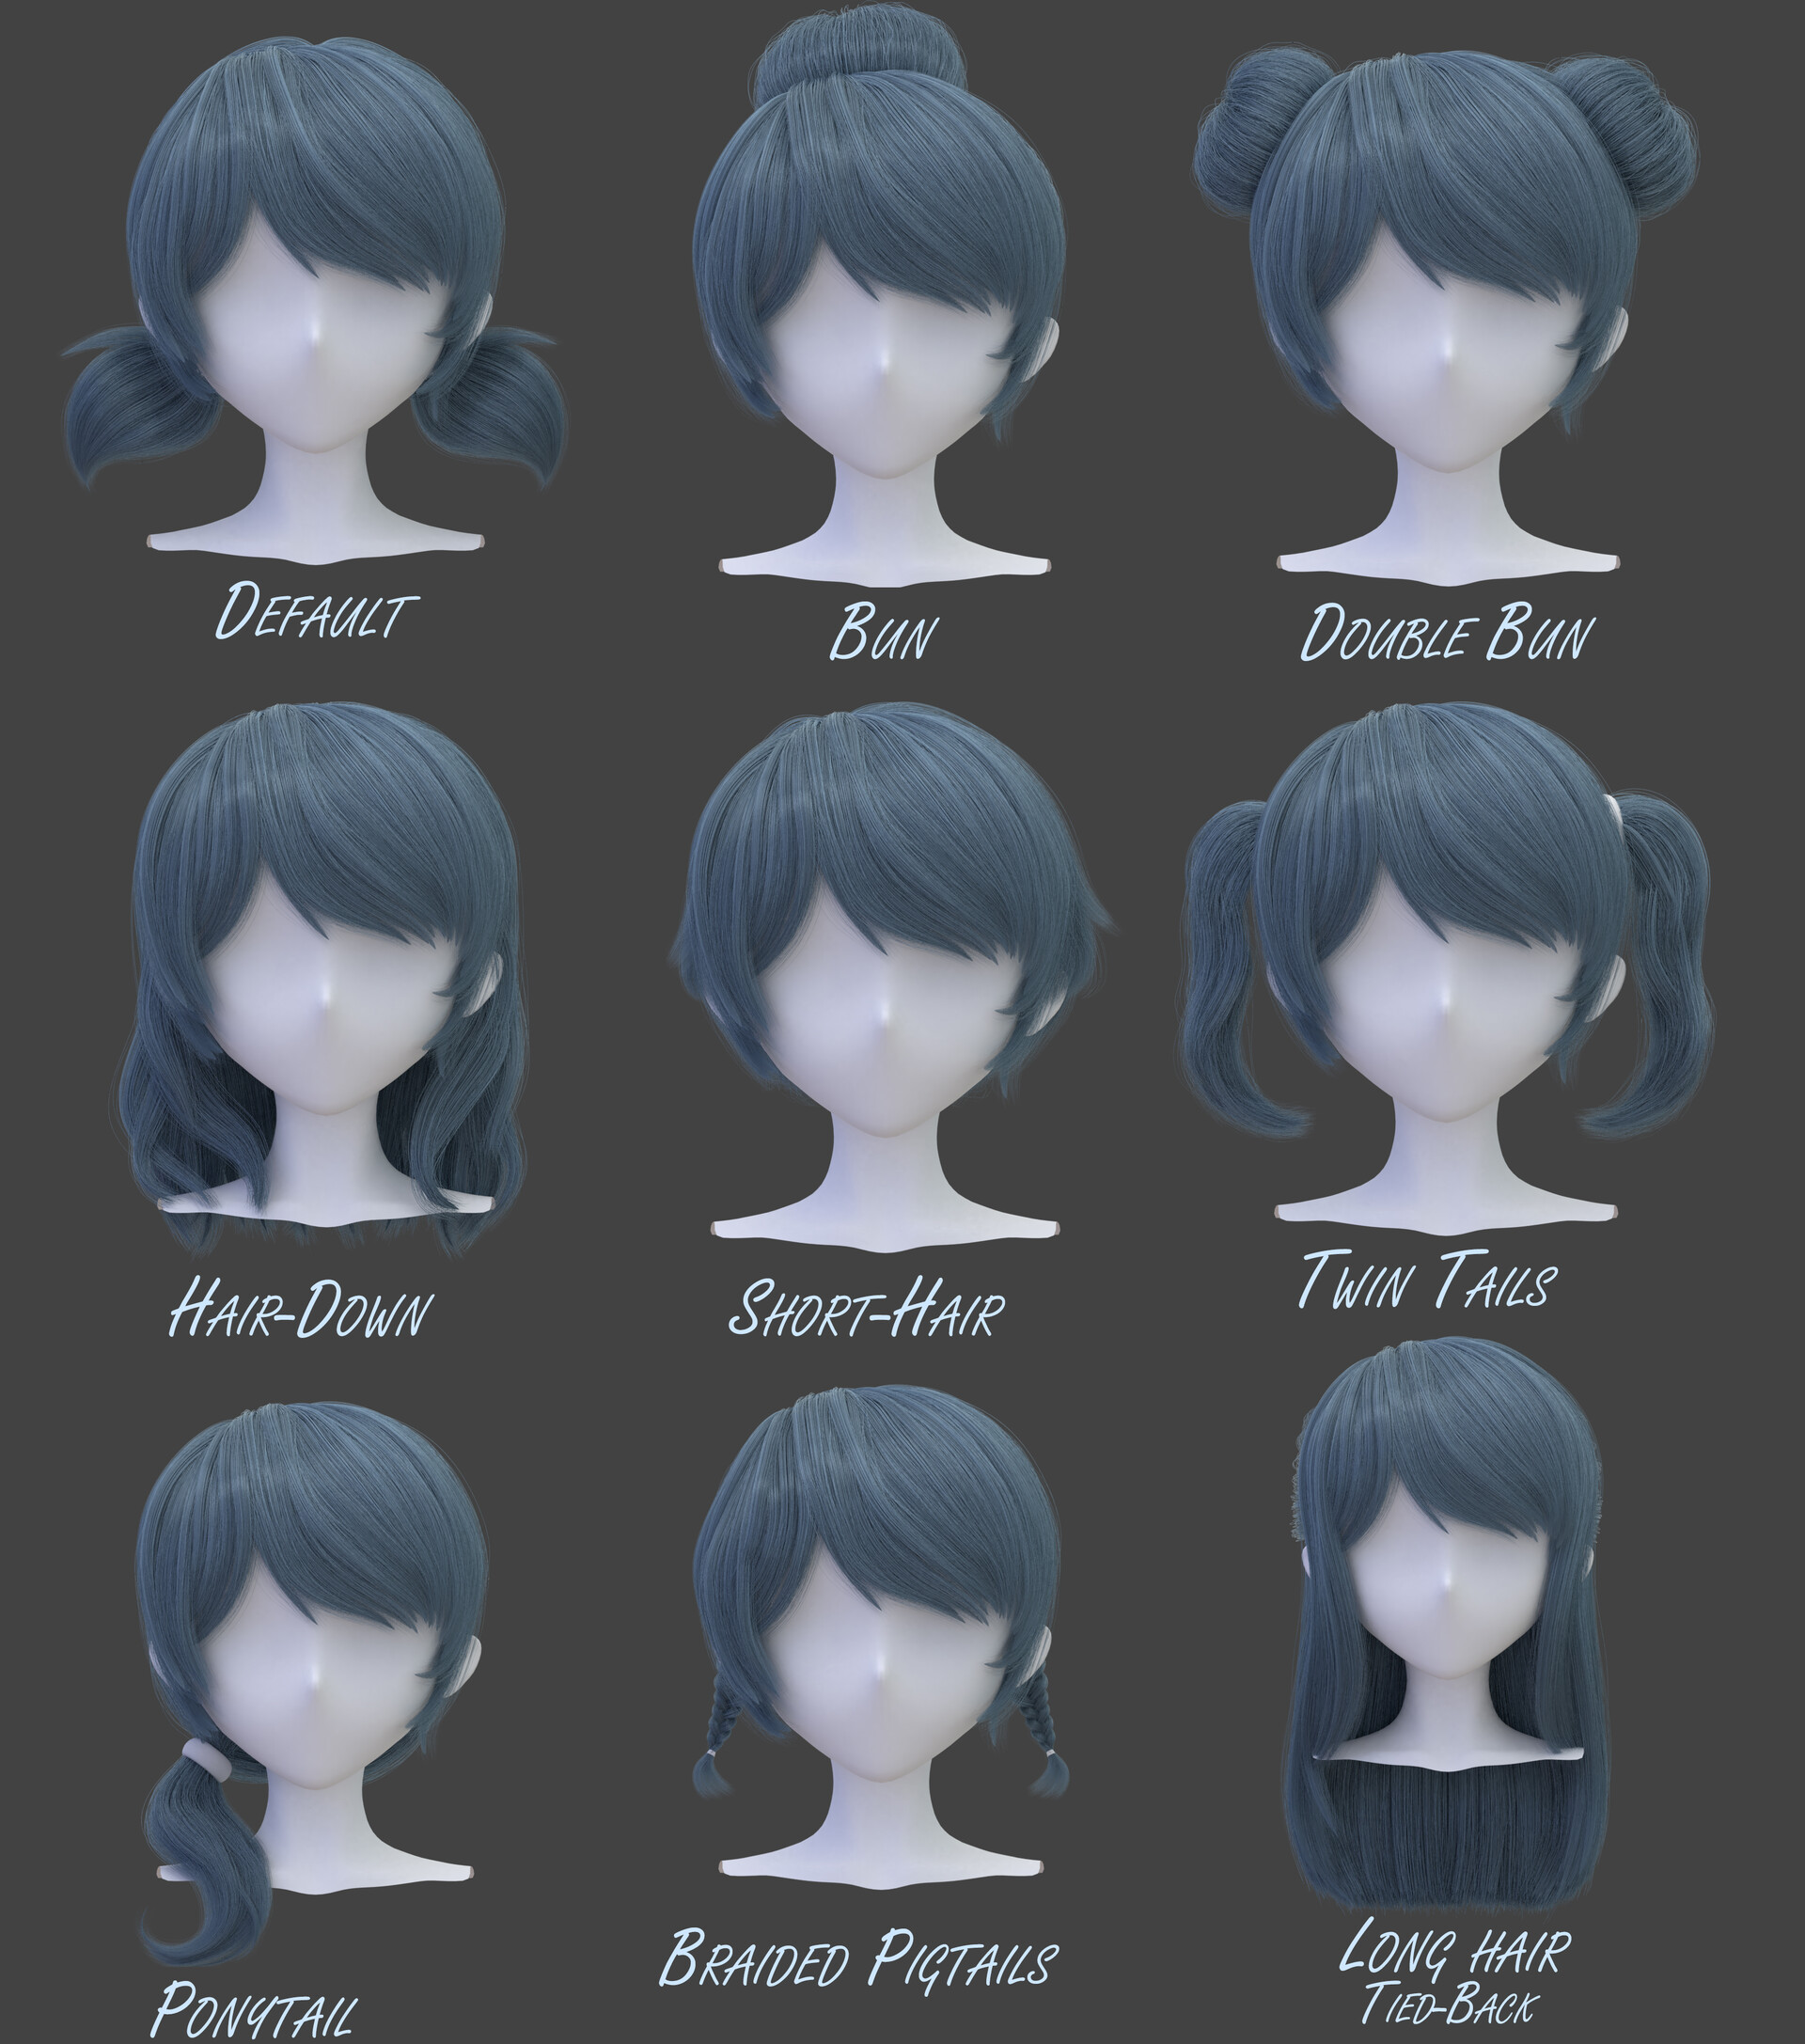 ArtStation - Anime Hairstyles